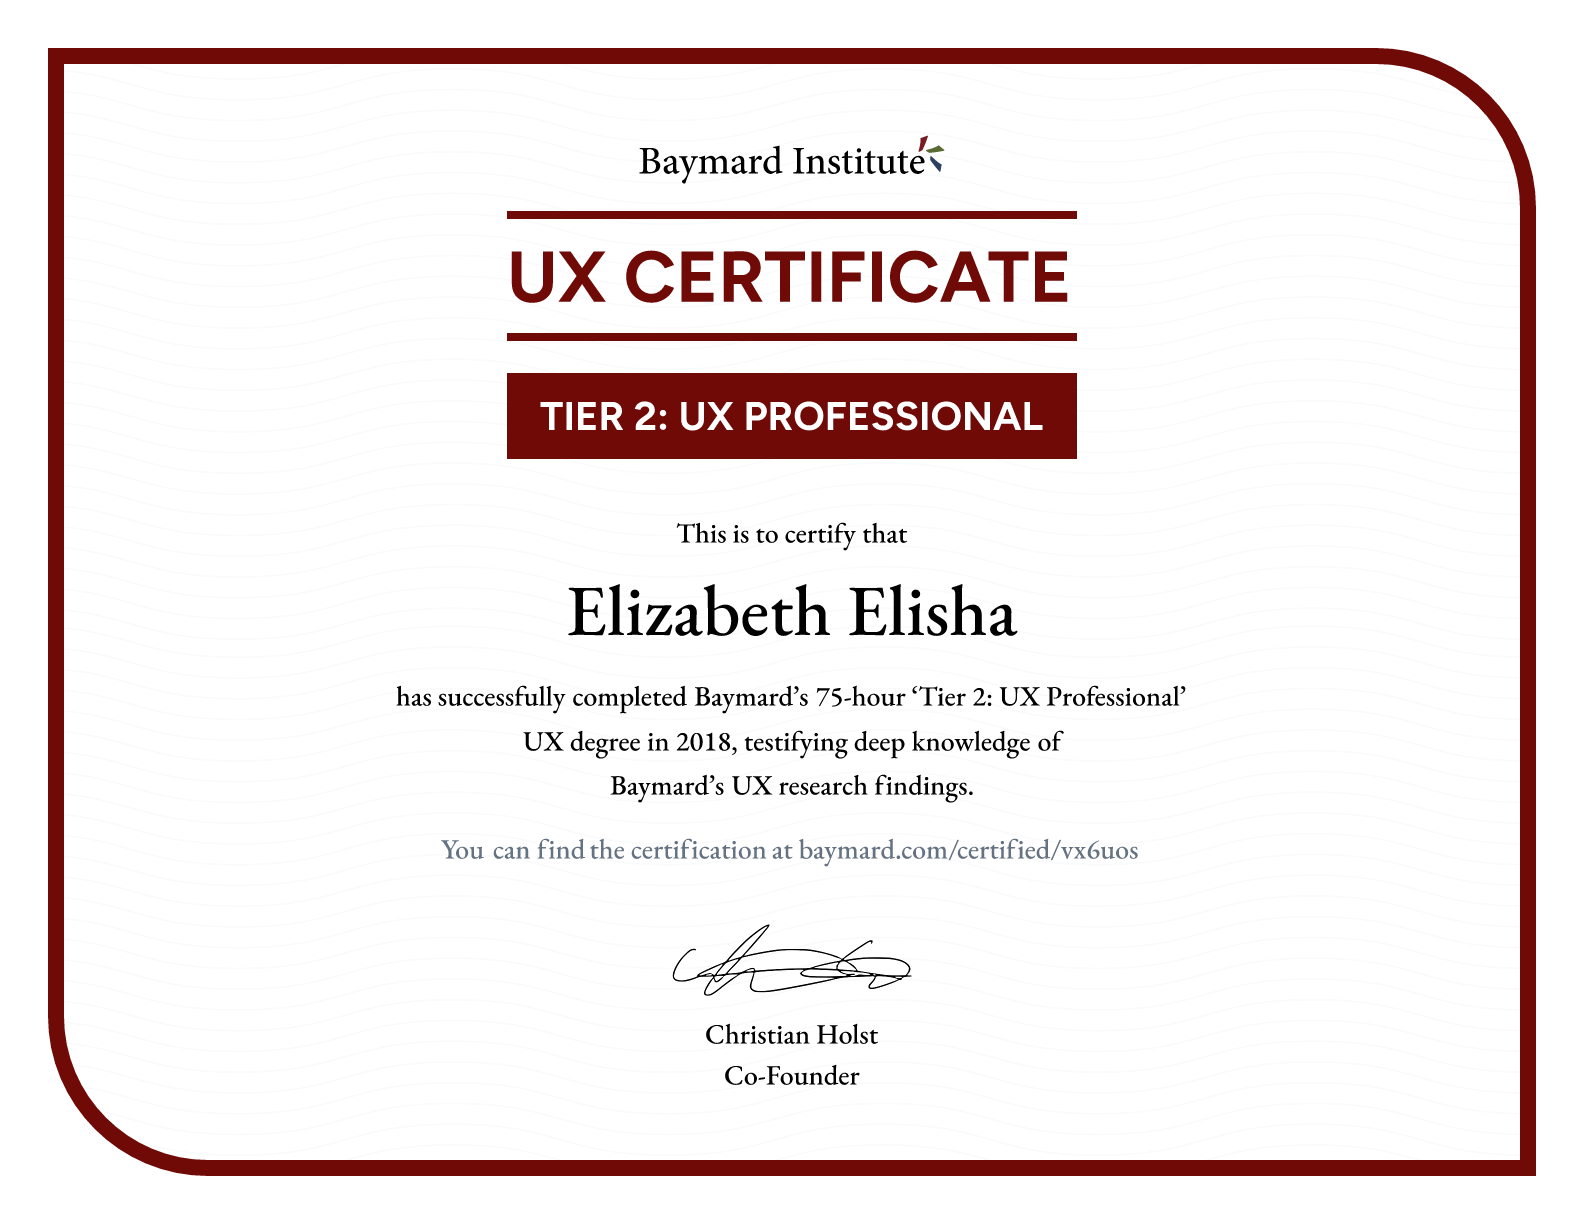 Elizabeth Elisha’s certificate